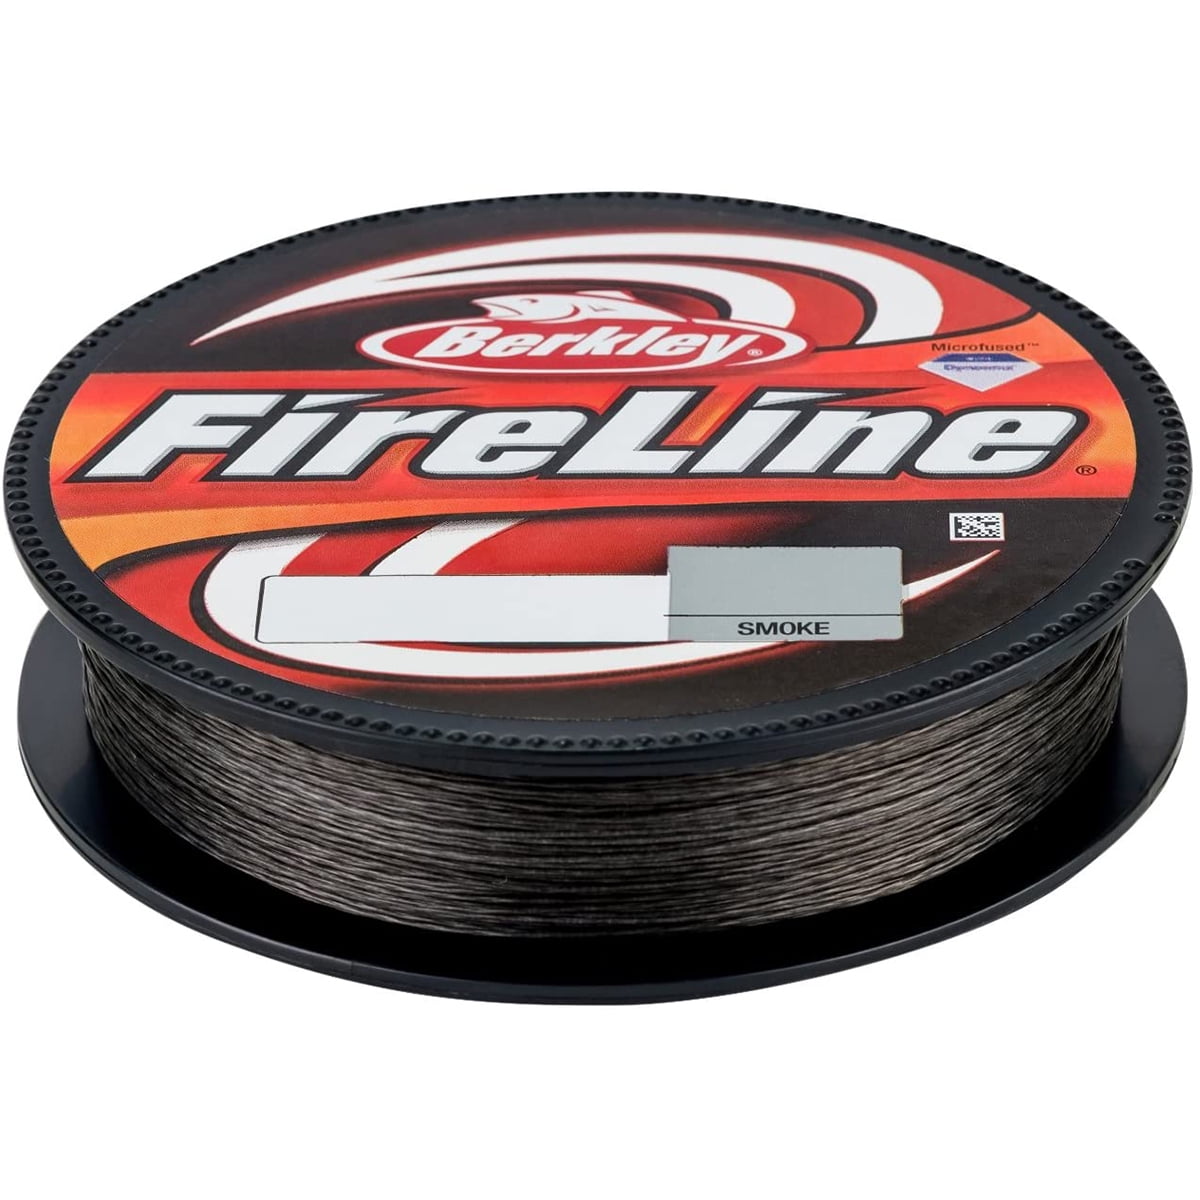 100,125,300,1500yd Berkley Fireline Fused Superline Braided Line Smoke/Crystal 